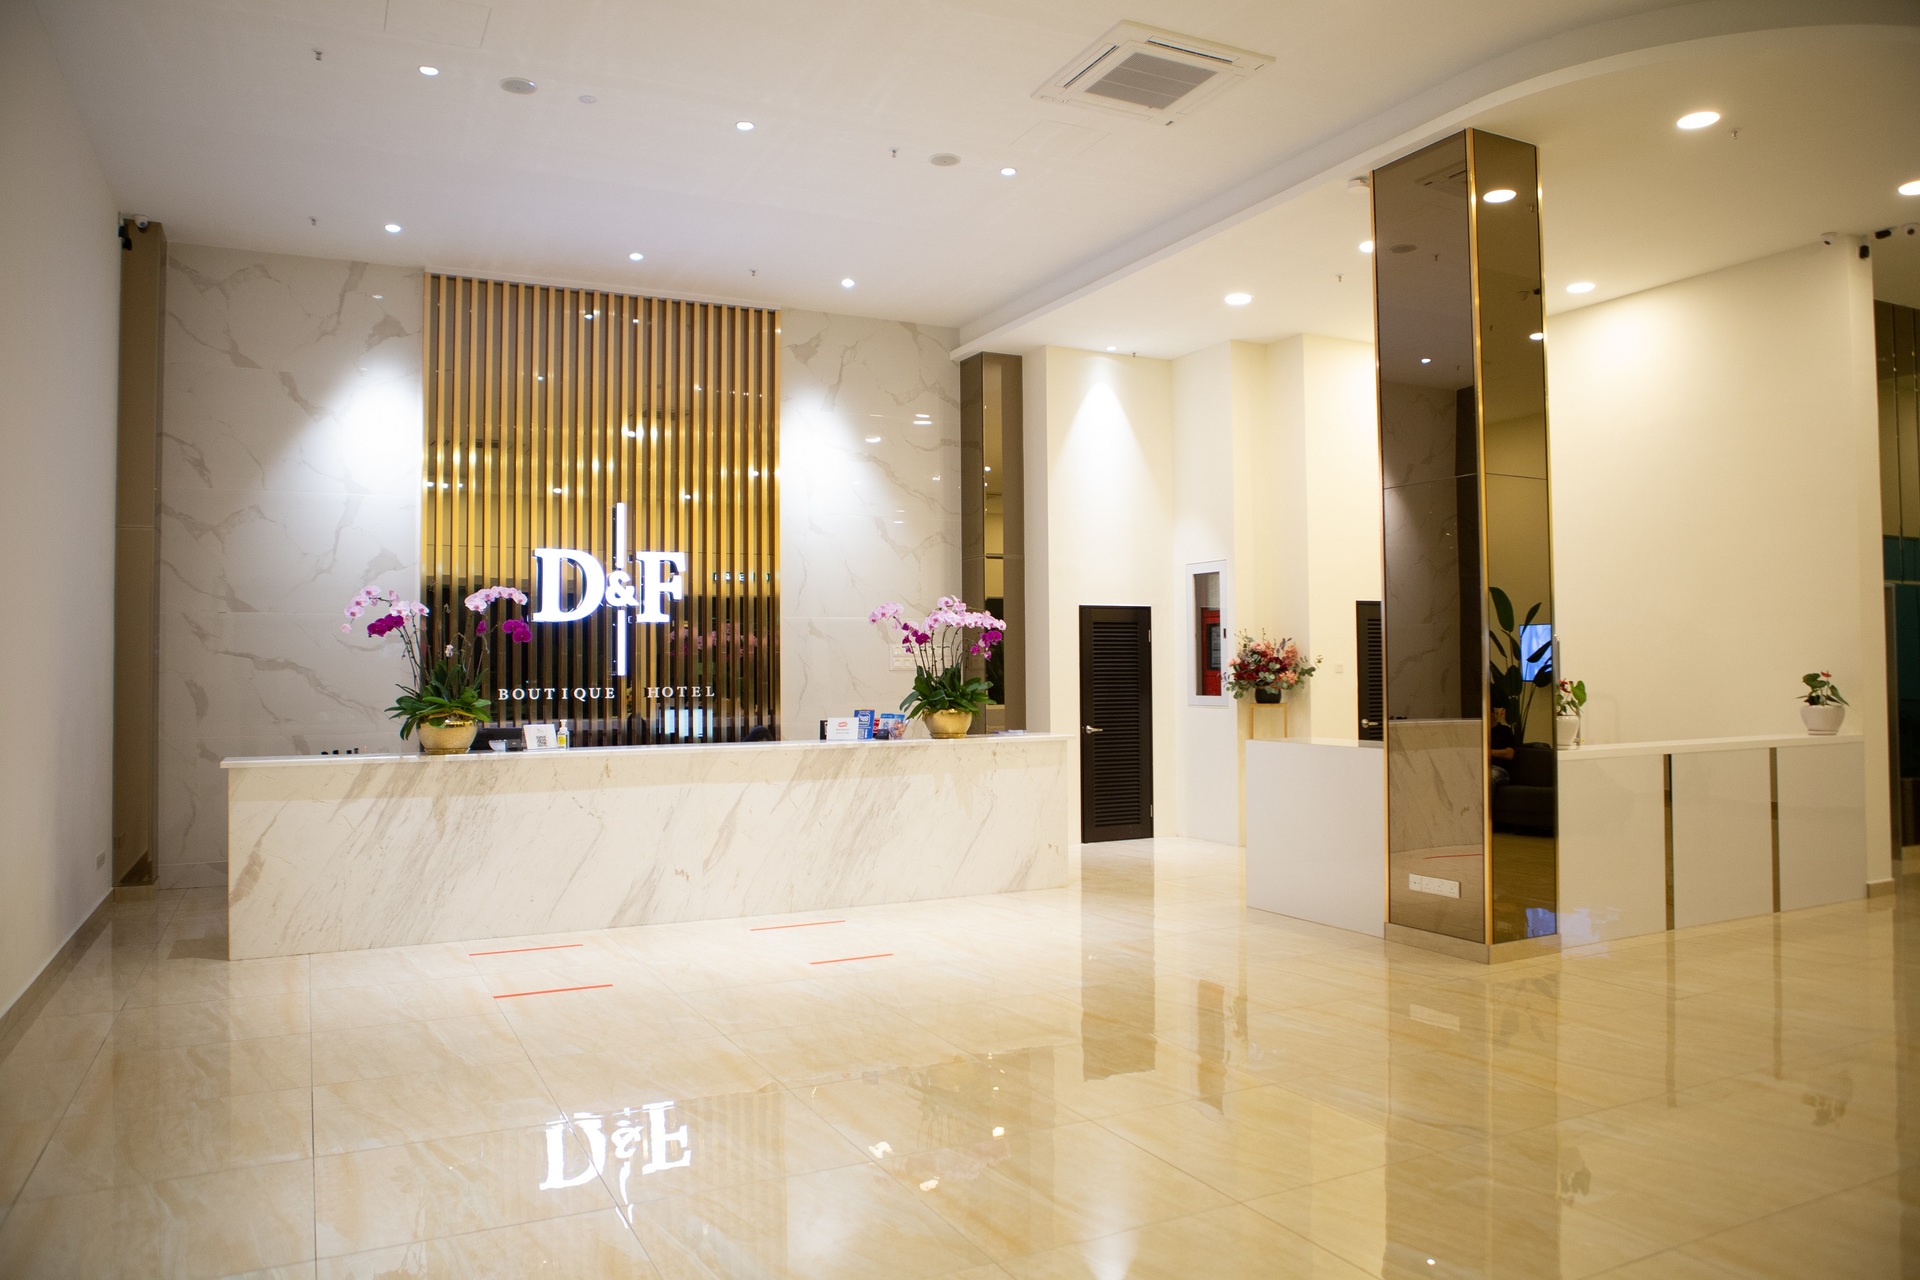 D&f boutique hotel seremban 2